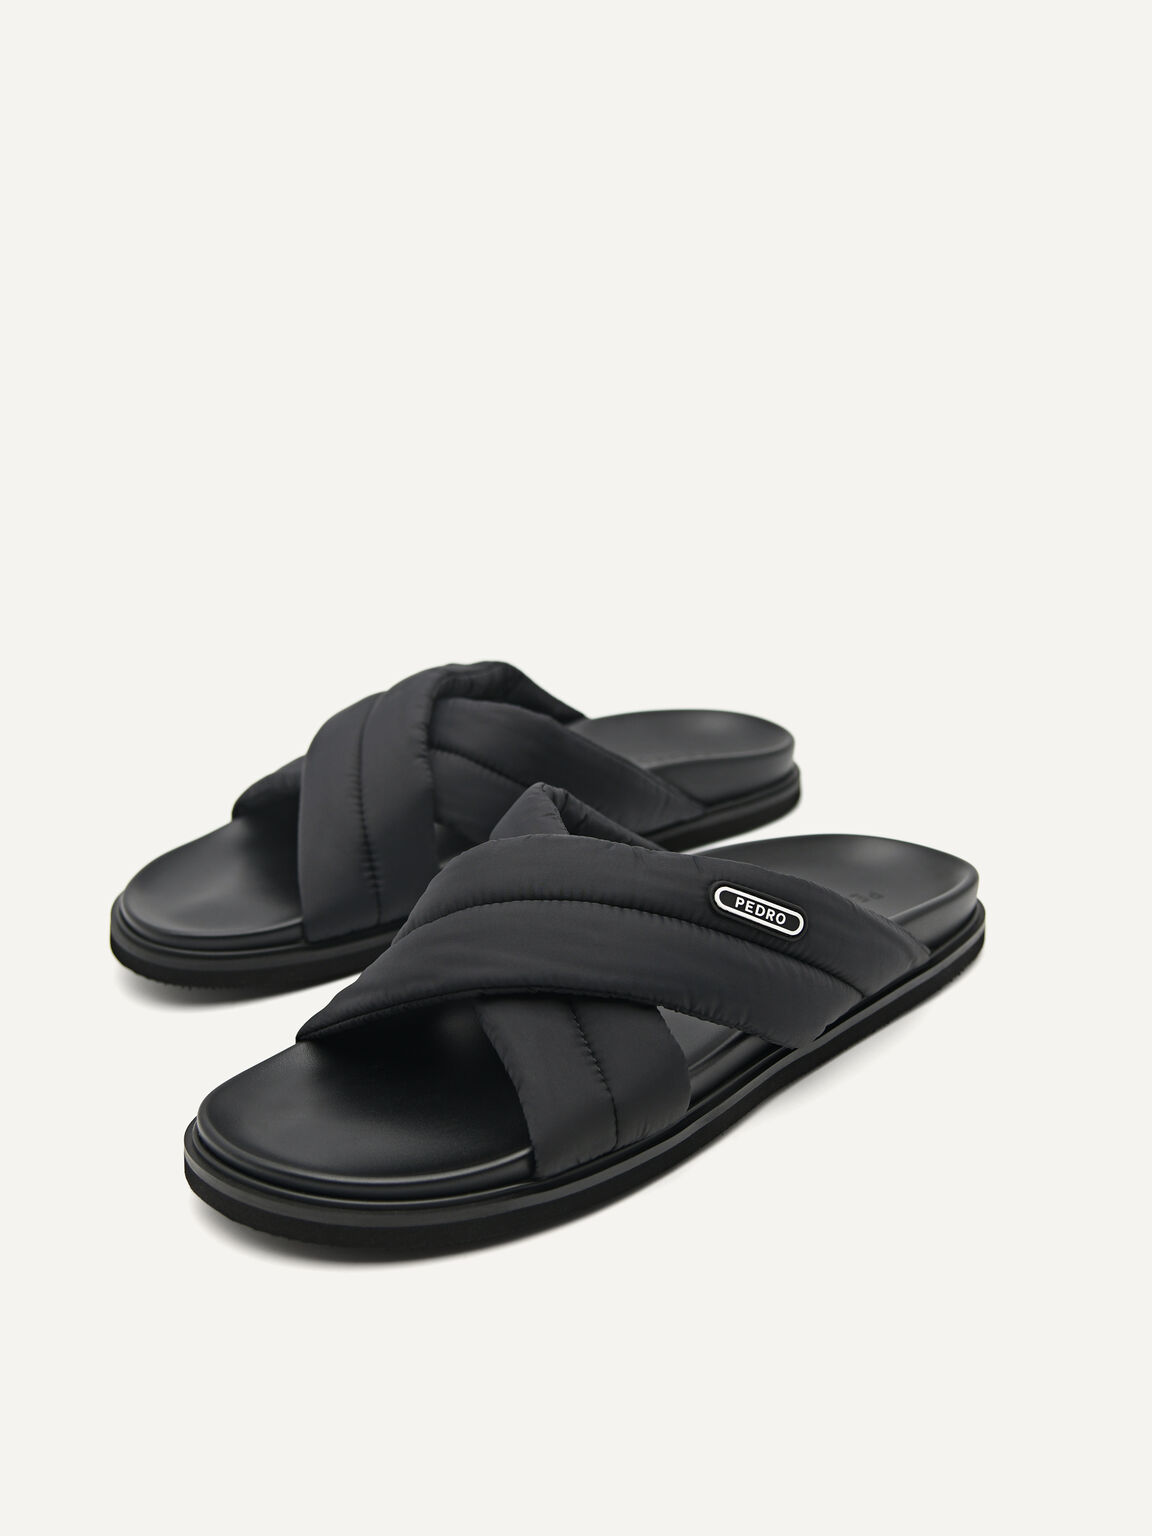 Nylon Puffy Cross-strap Sandals, Black